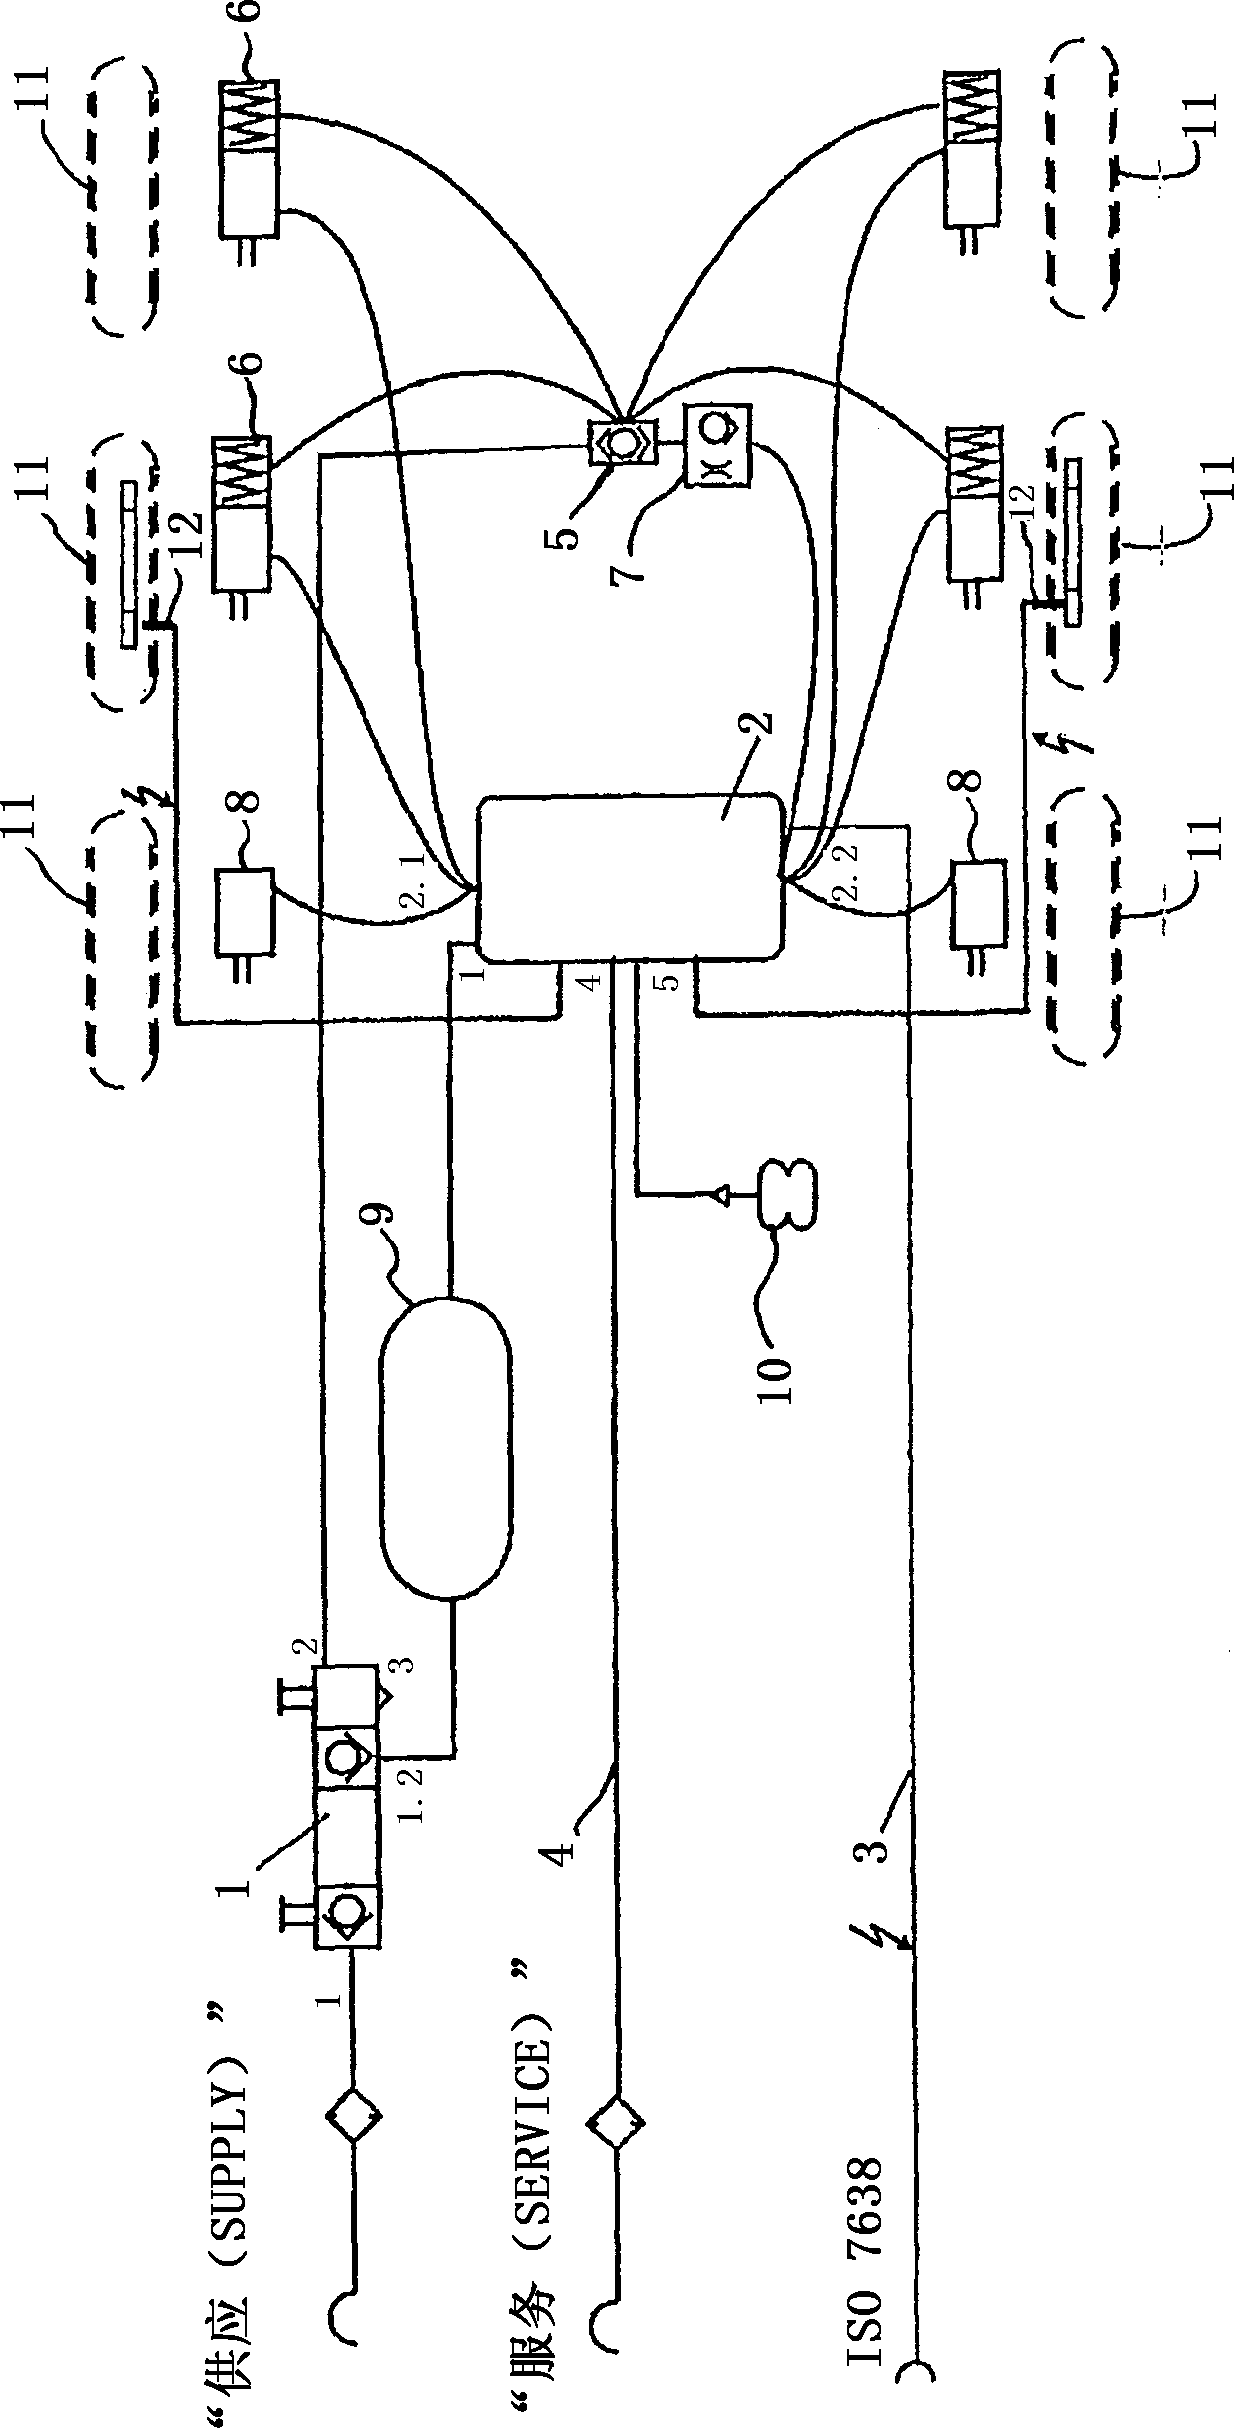 Pneumatic brake system for a trailer, and brake control modulator